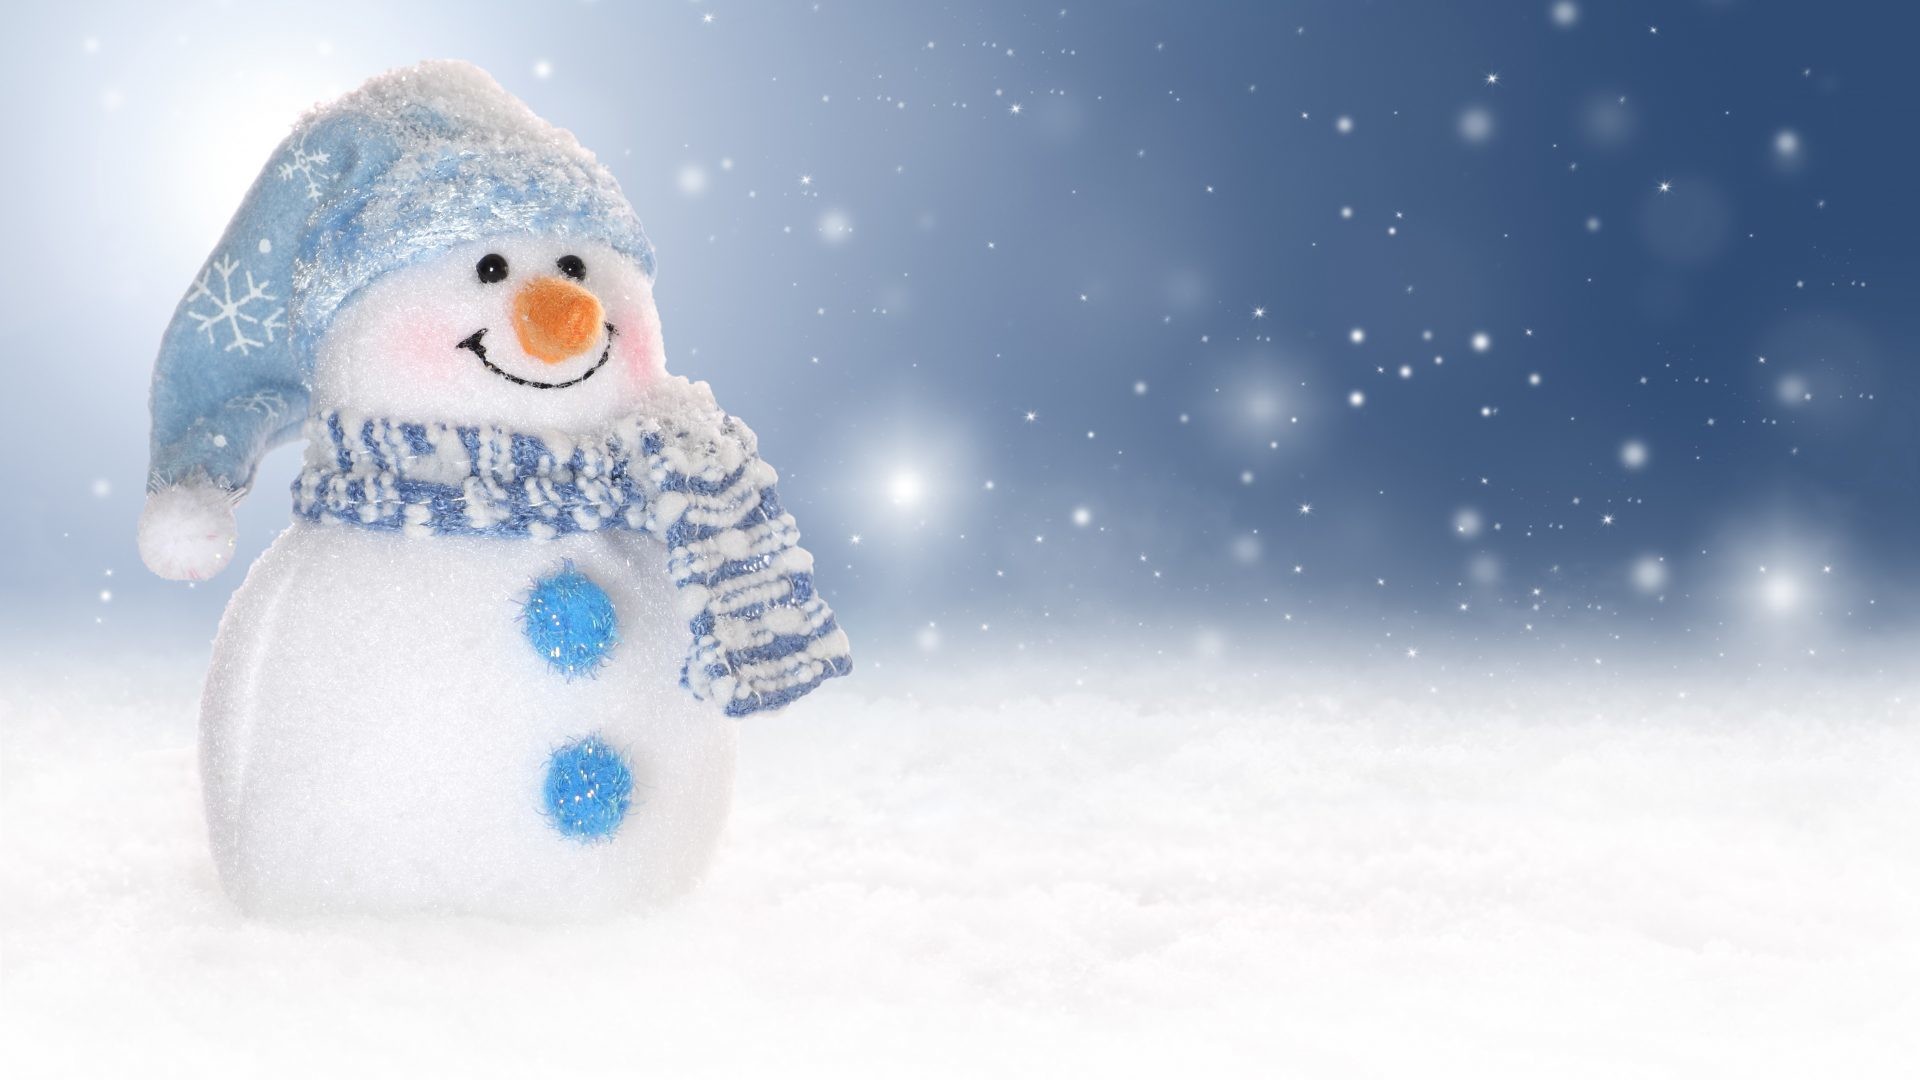 1920x1080 Snowman Tag - Snowman Snow Winter Xmas Cute Christmas Characters Desktop  Wallpaper Scenes for HD 16